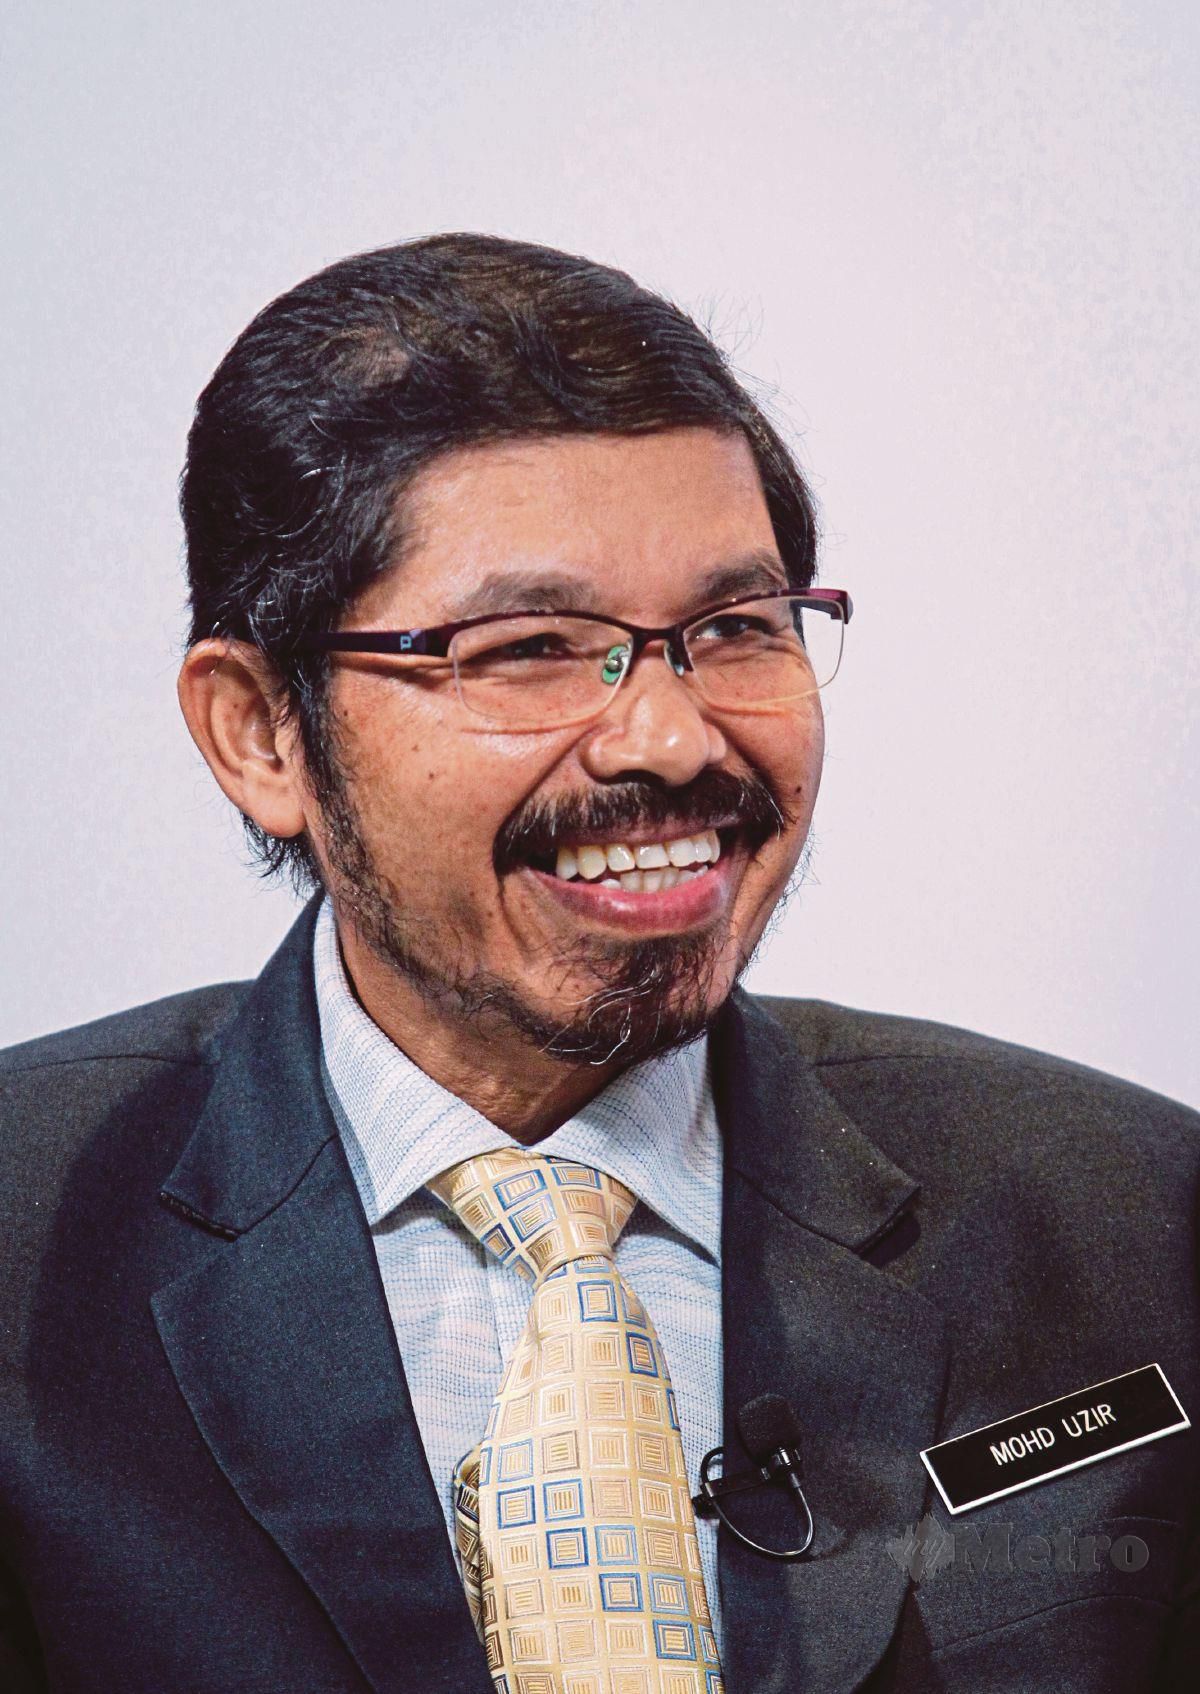 Dr Mohd Uzir